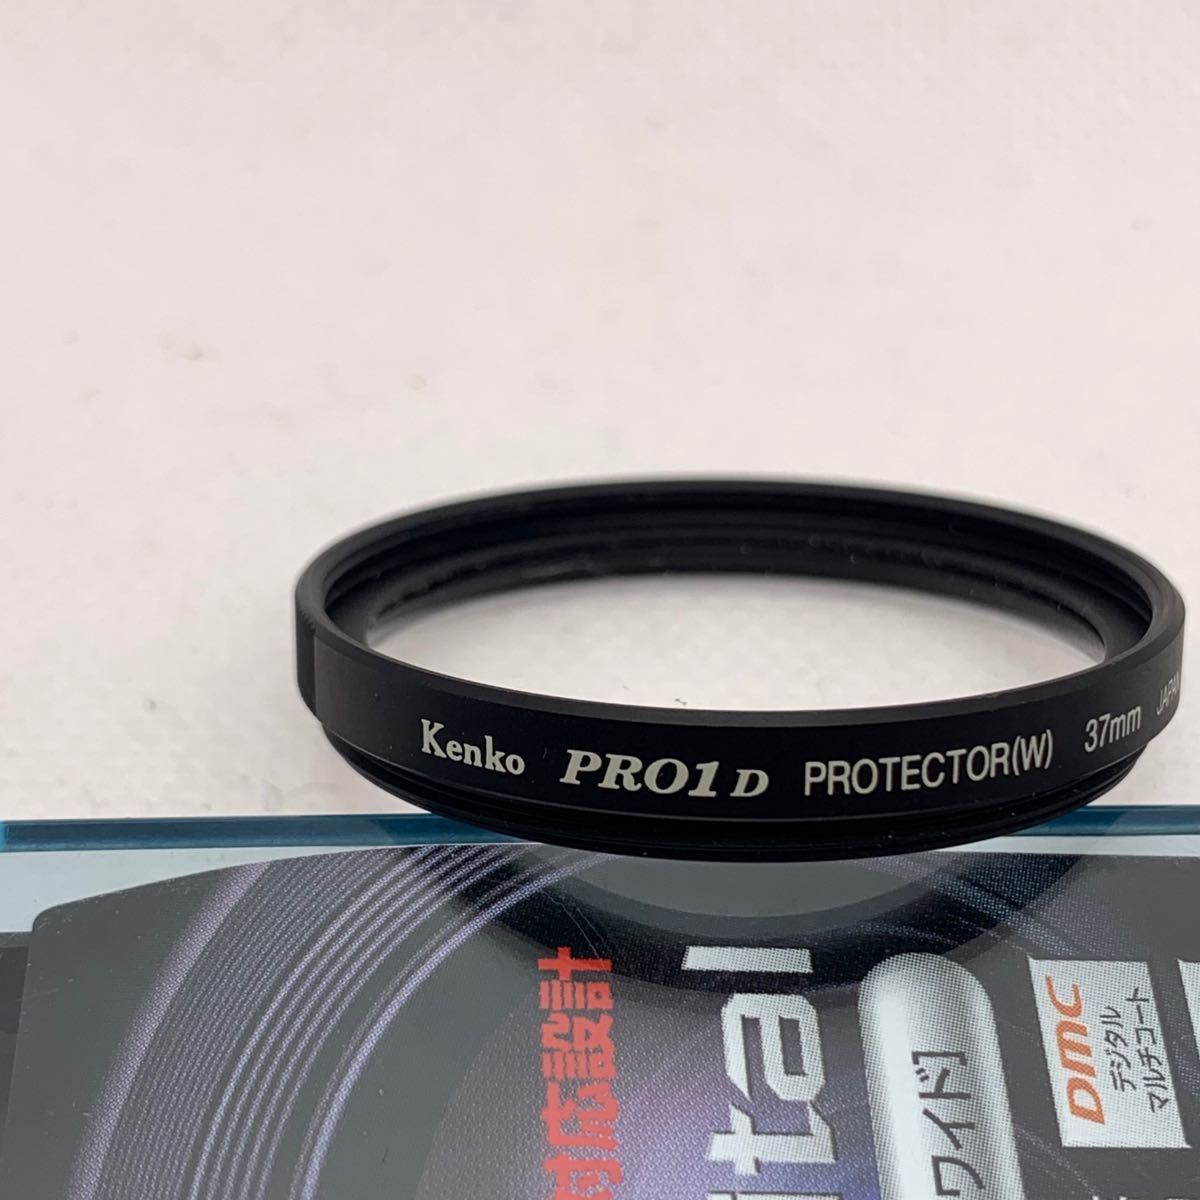 kenko  PRO1 DIGITAL   PROTECTOR(W)  37mm